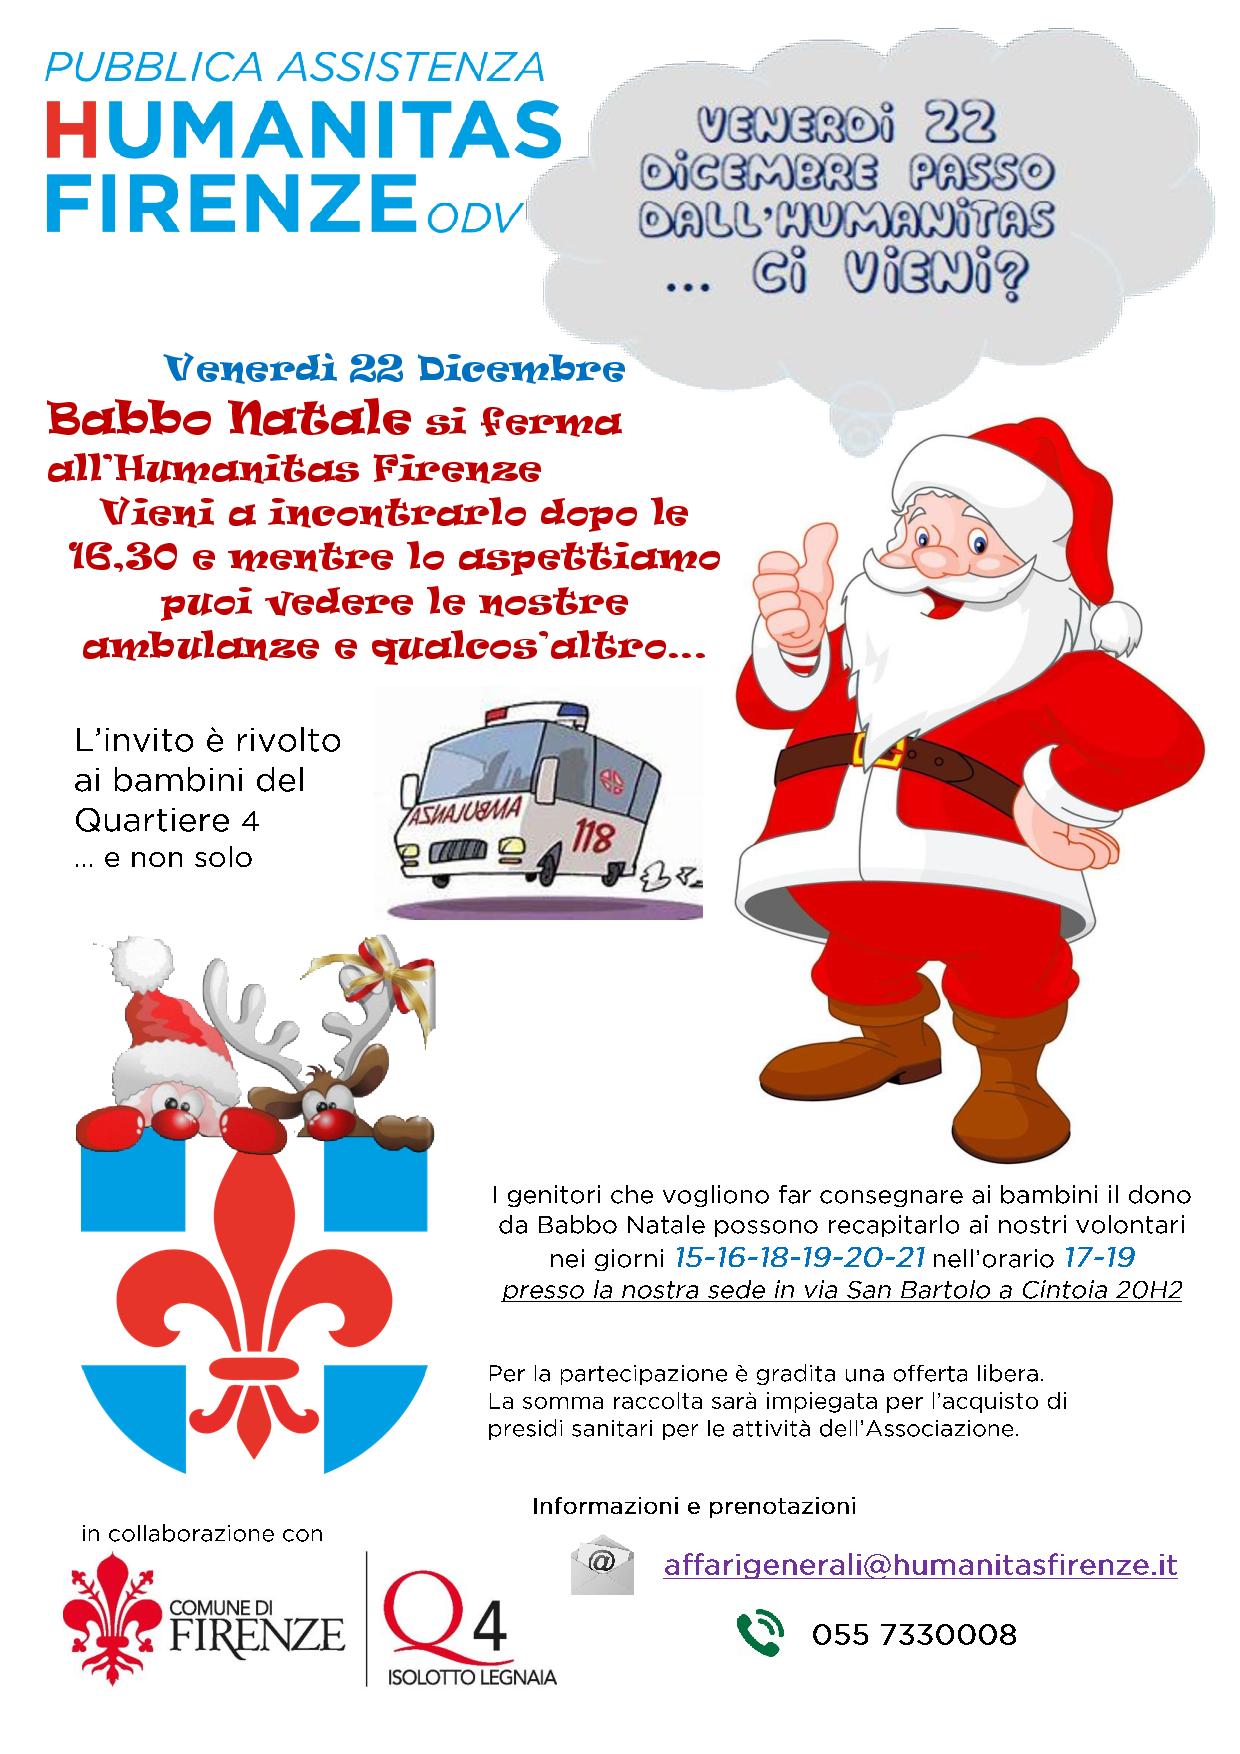 Babbo Natale all’Humanitas Firenze